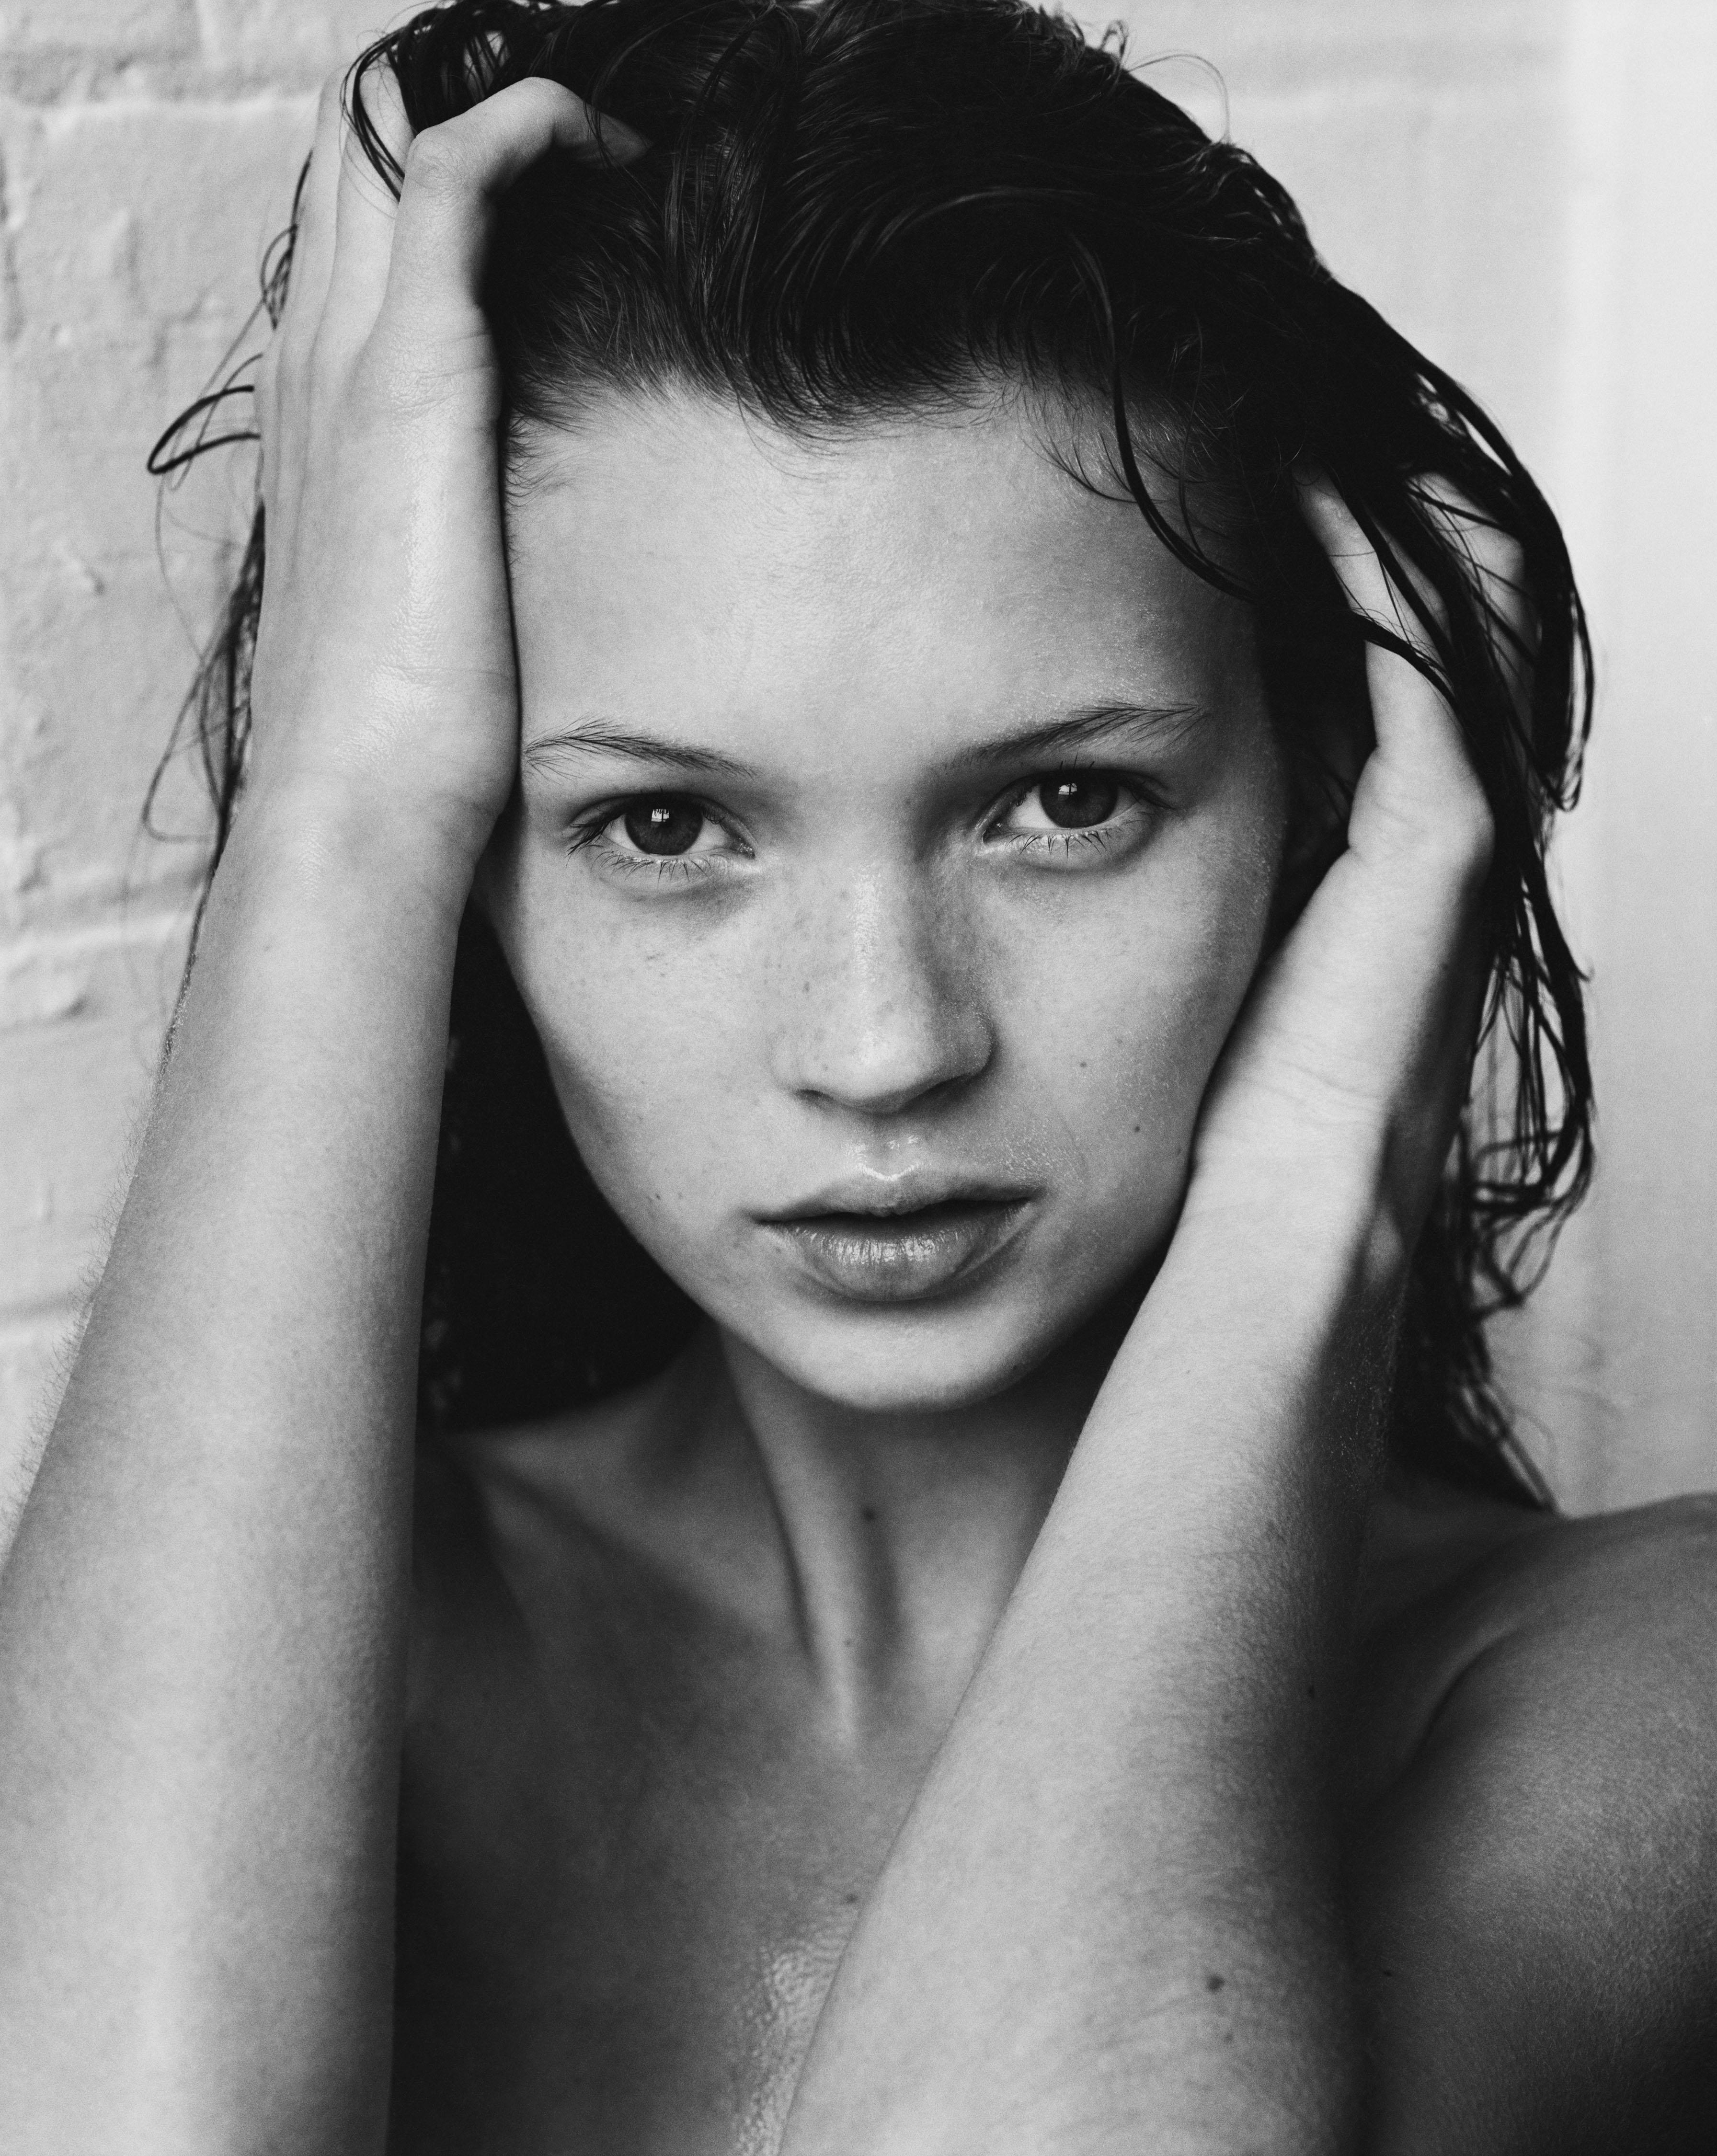 Jake Chessum Black and White Photograph - Kate Moss at 16